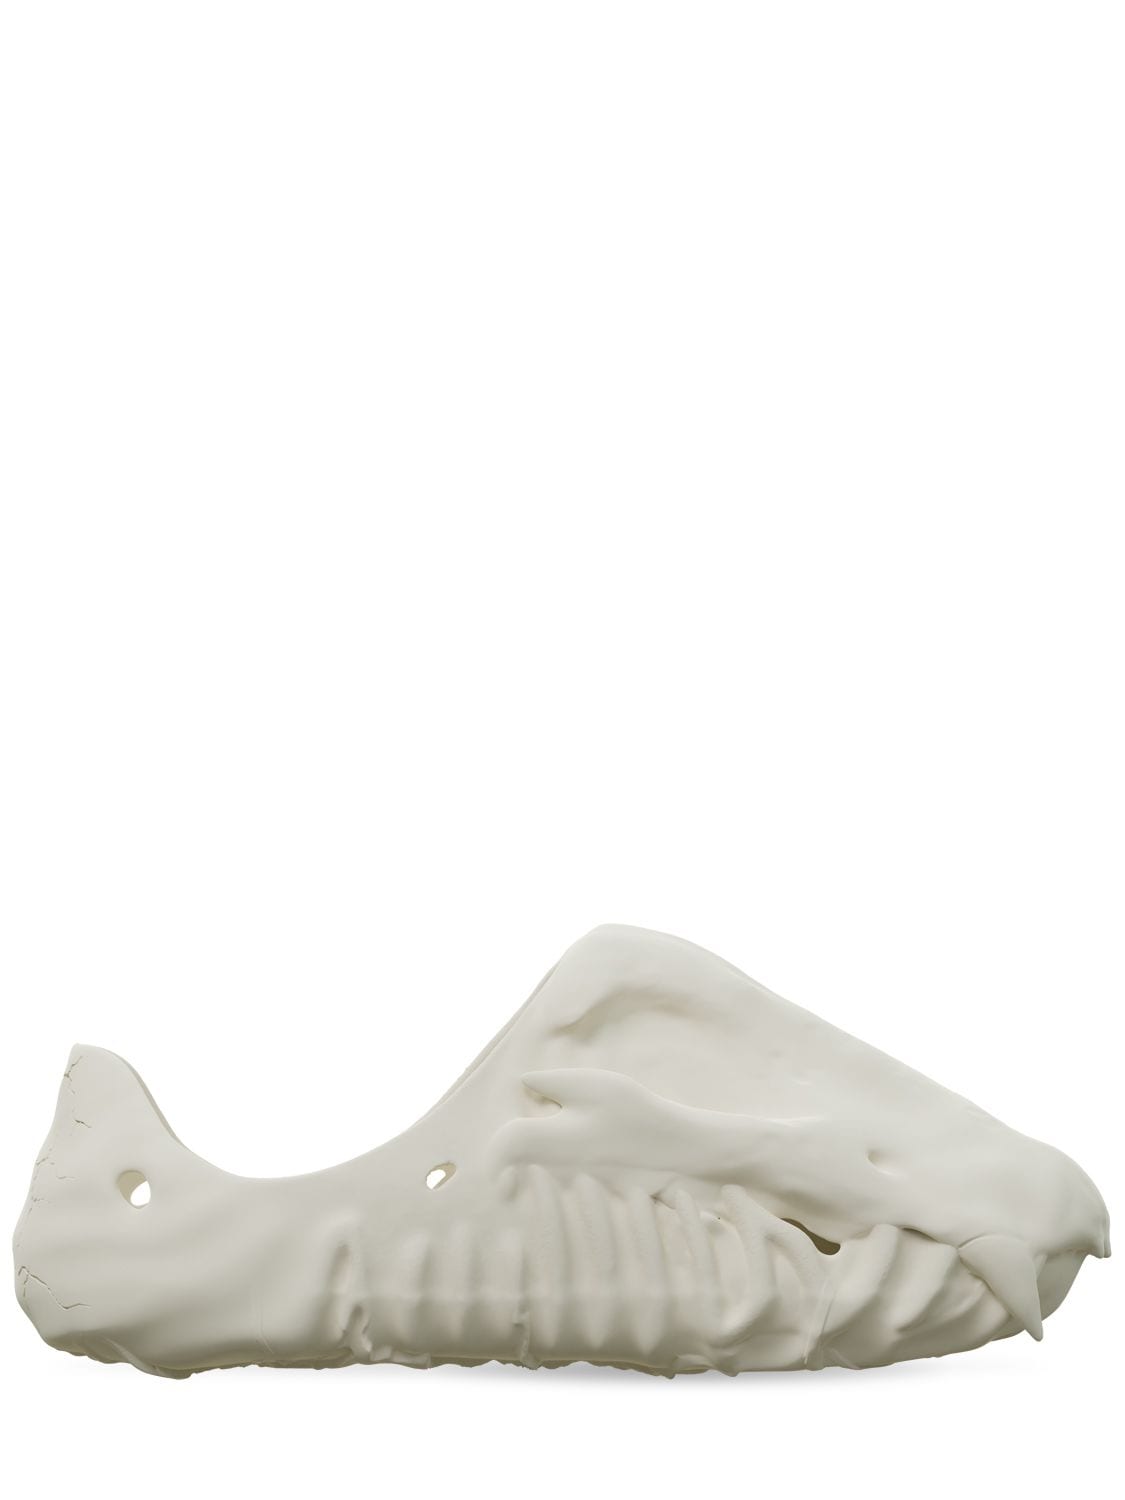 Kito Wares Fossil X Jaguar Jag Foam Runner Sneakers In White